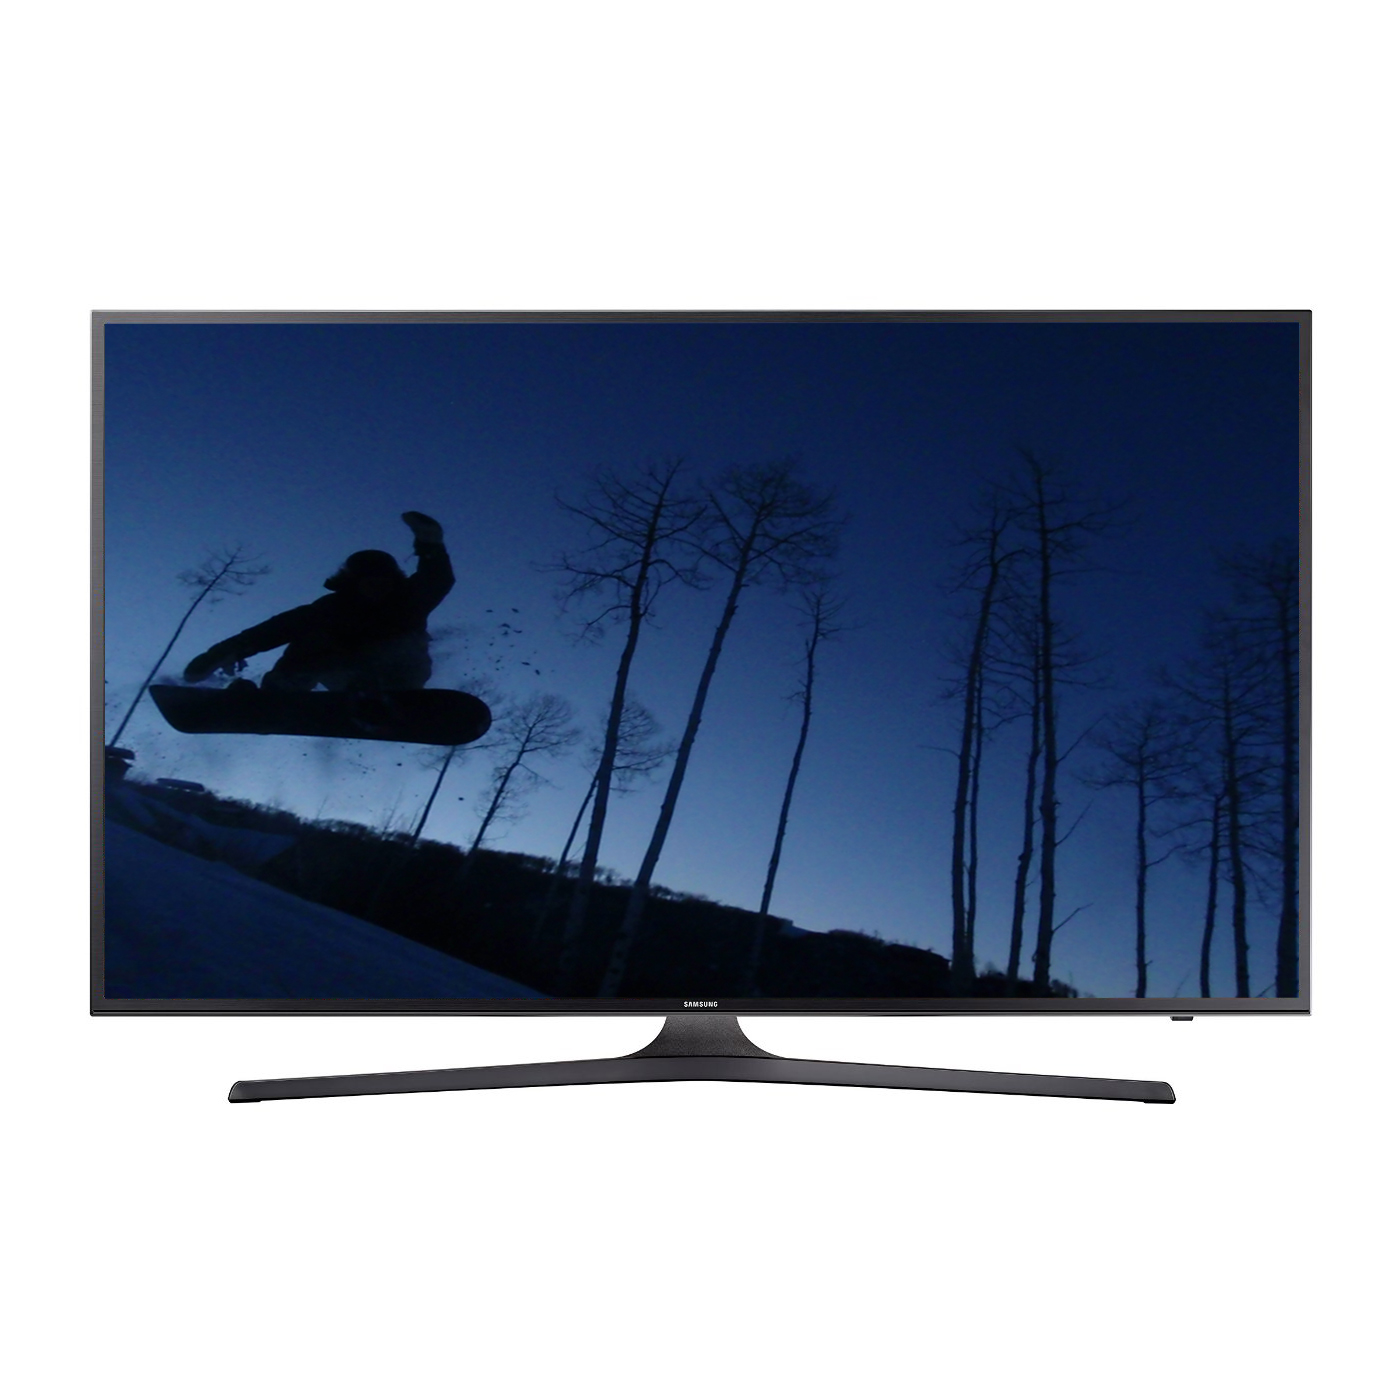 Samsung REFURBISHED60 IN. 4K SMART LED TV W/ WIFI-UN60KU6300FXZA